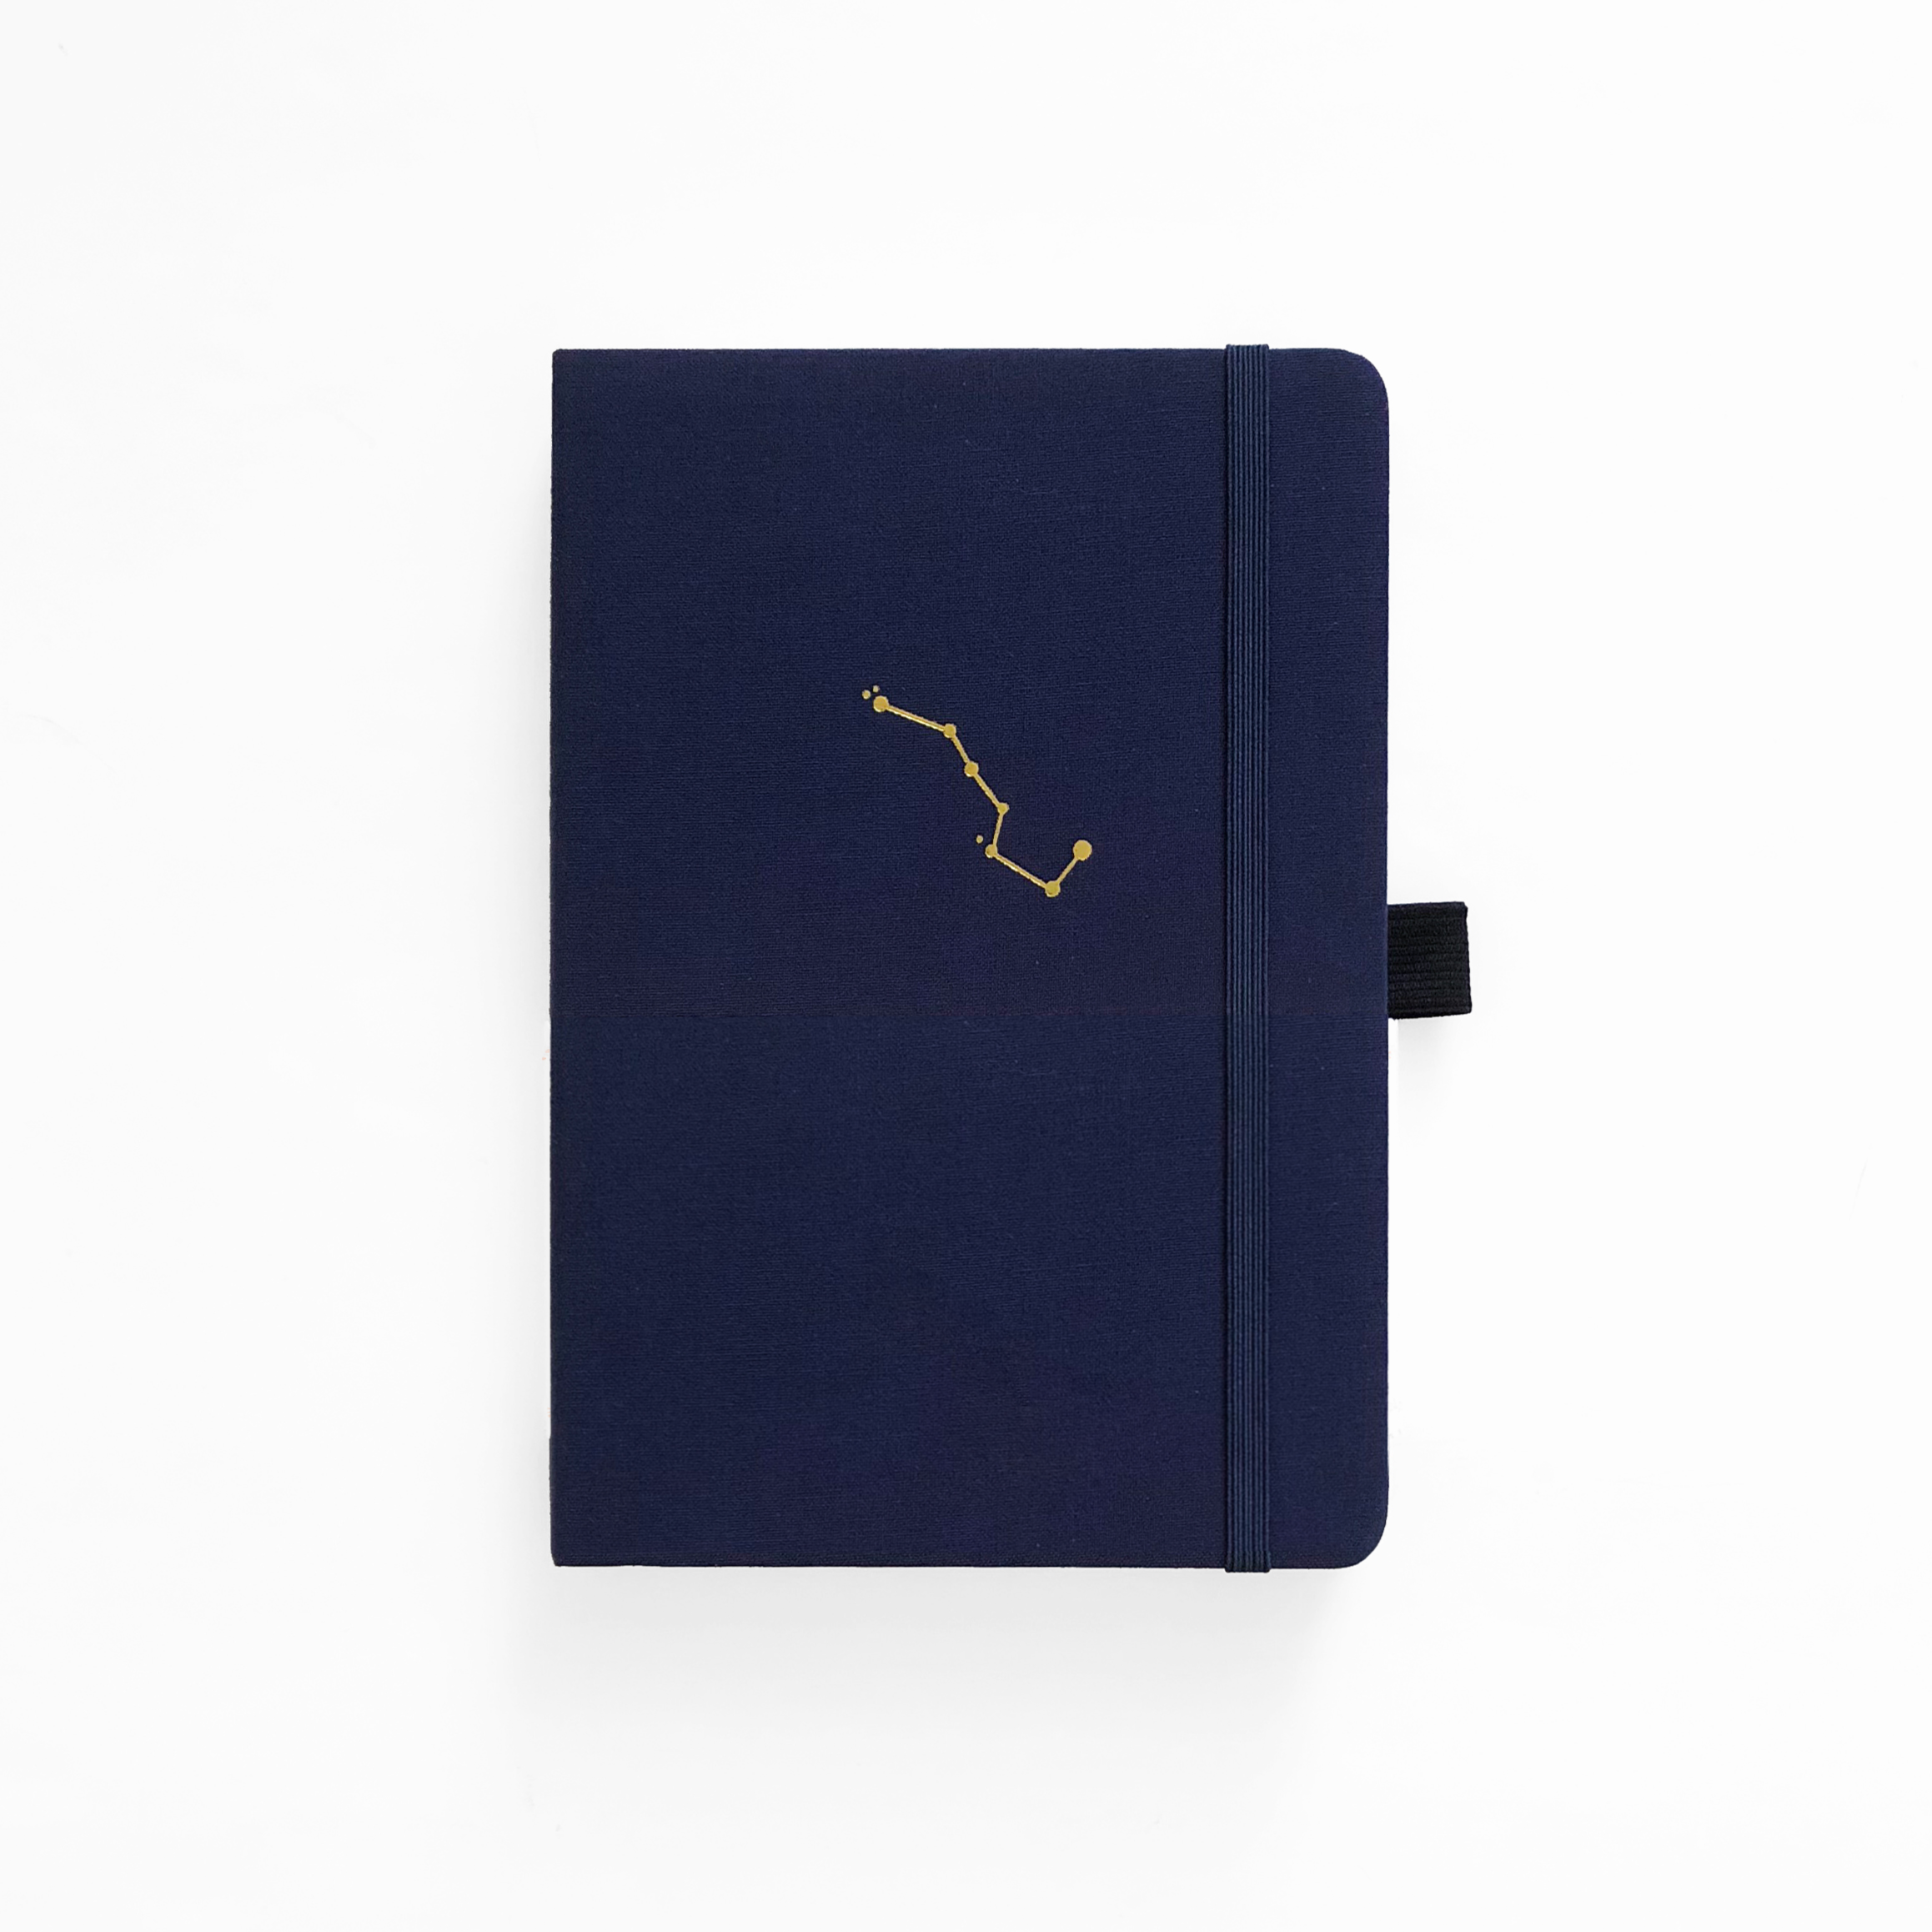 Night Sky Notebook - Archer and Olive